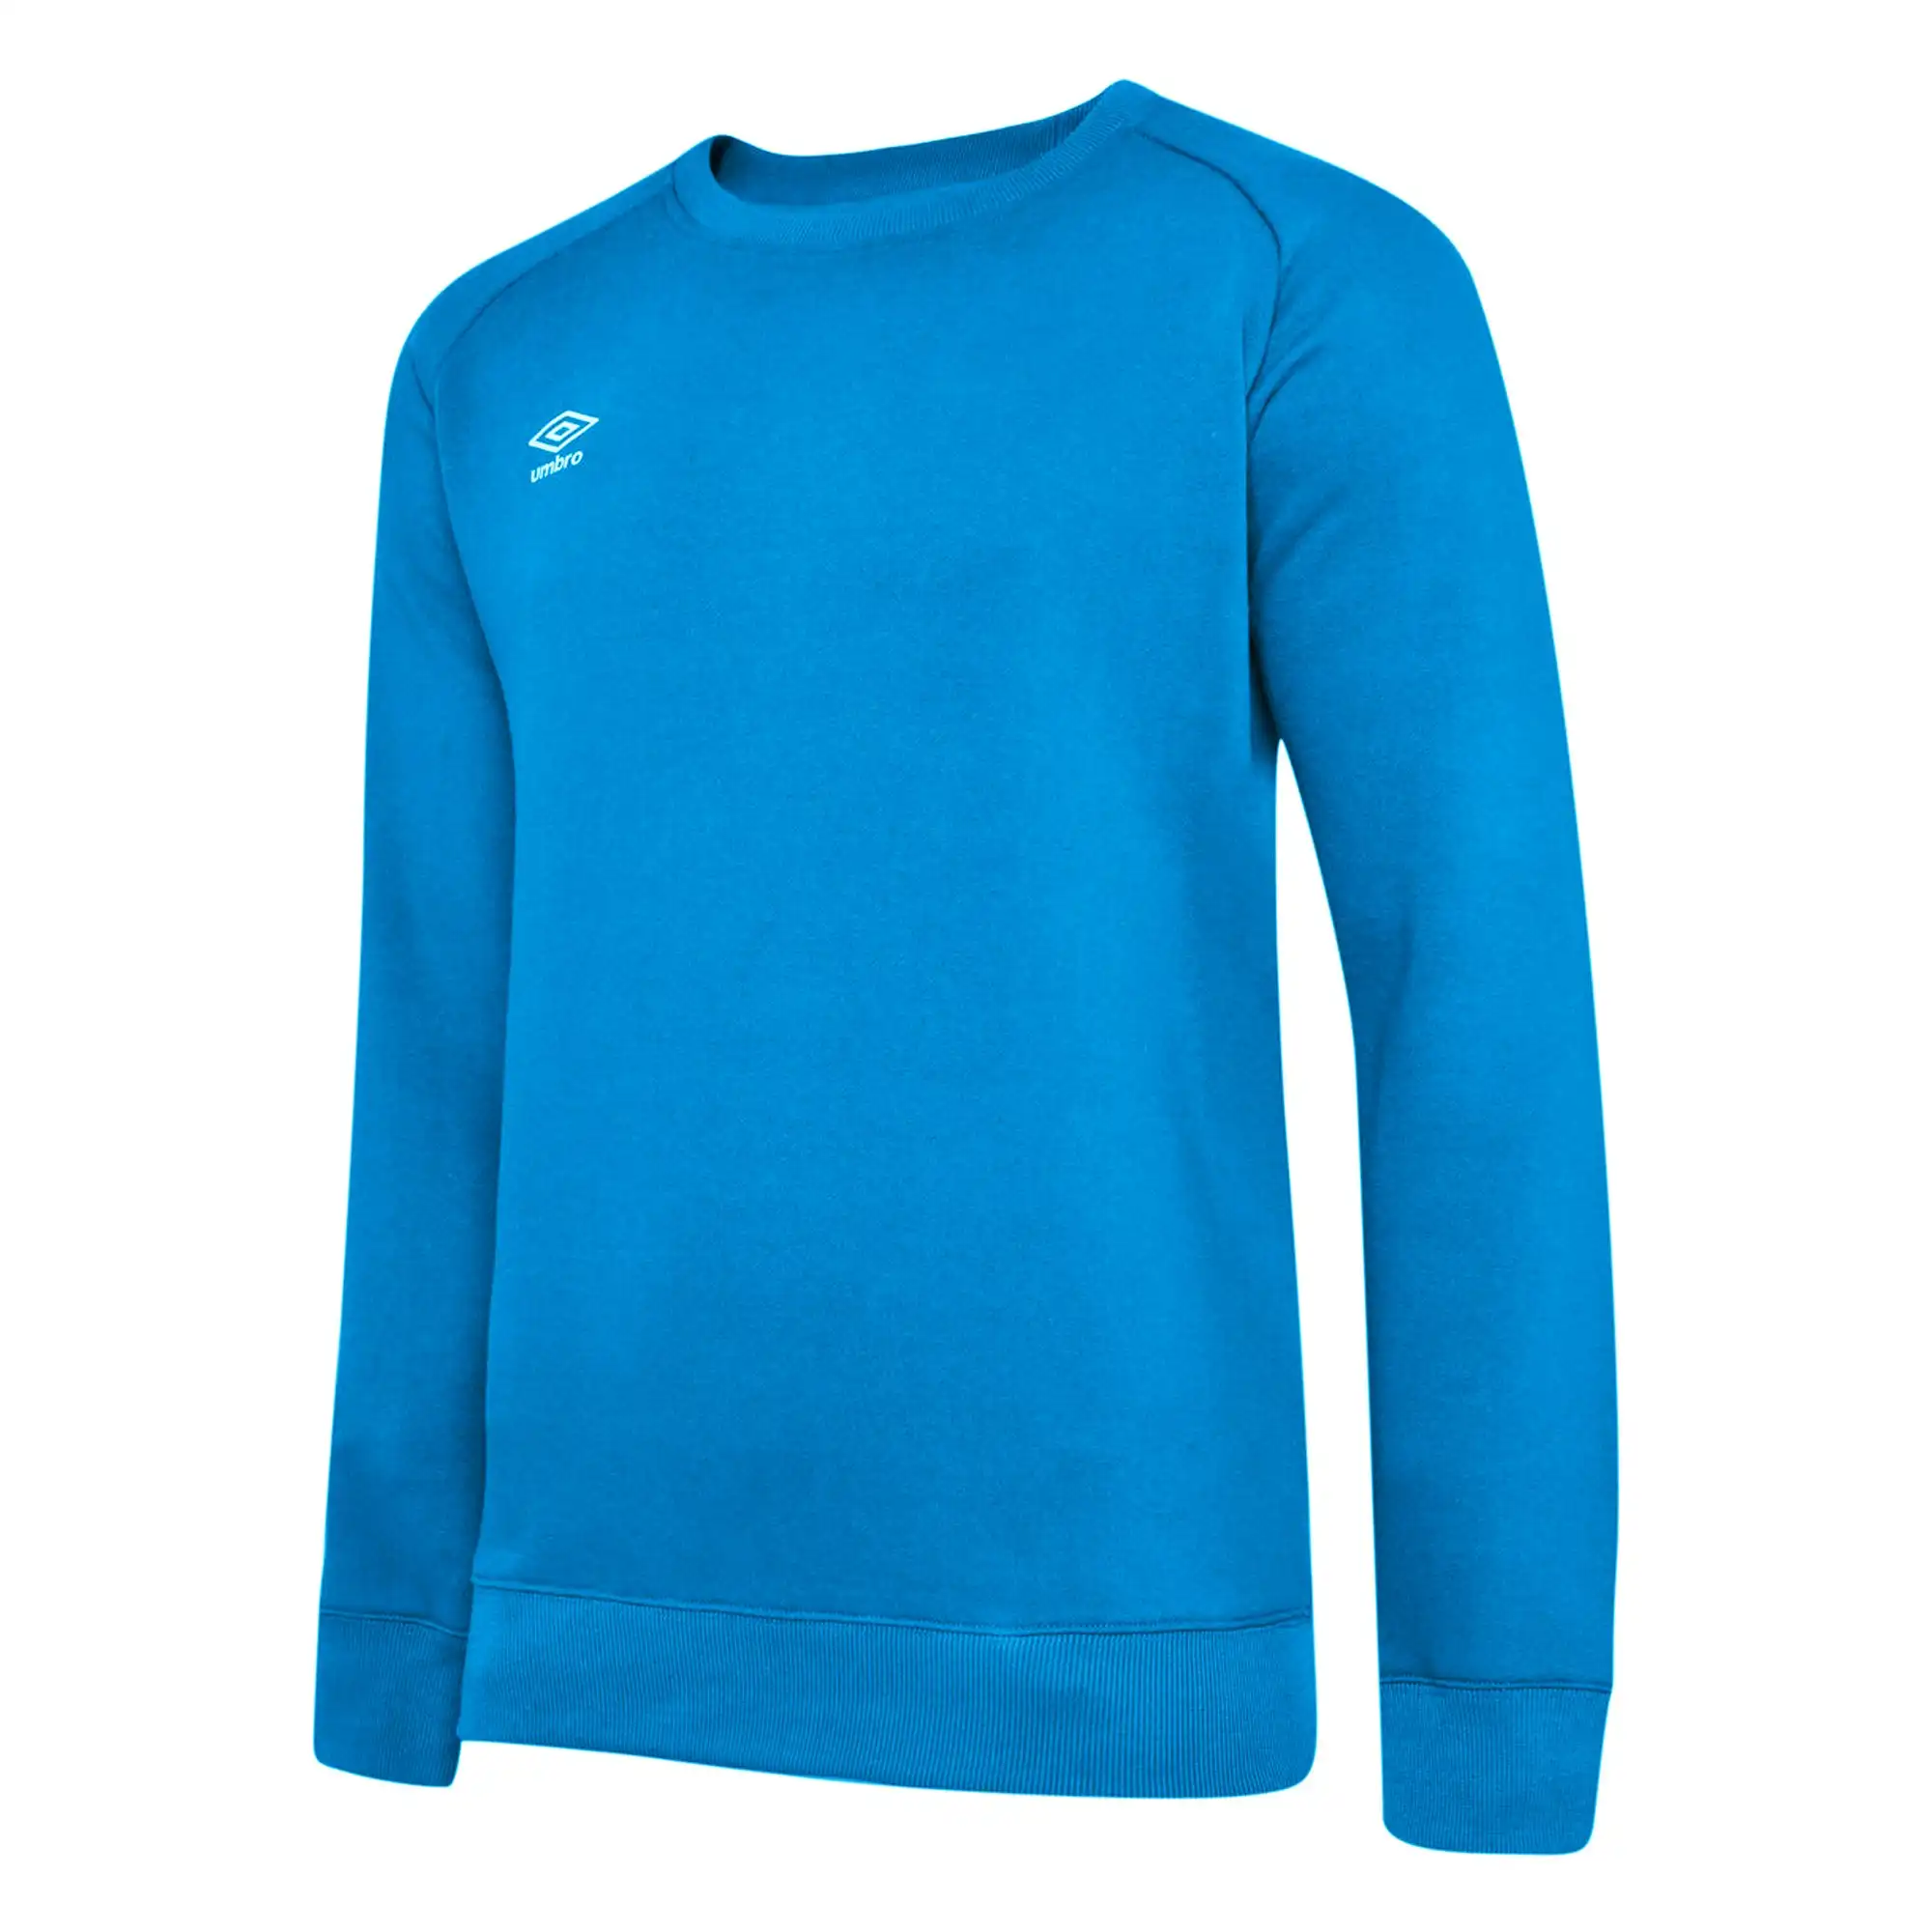 Umbro Mens Club Leisure Sweatshirt